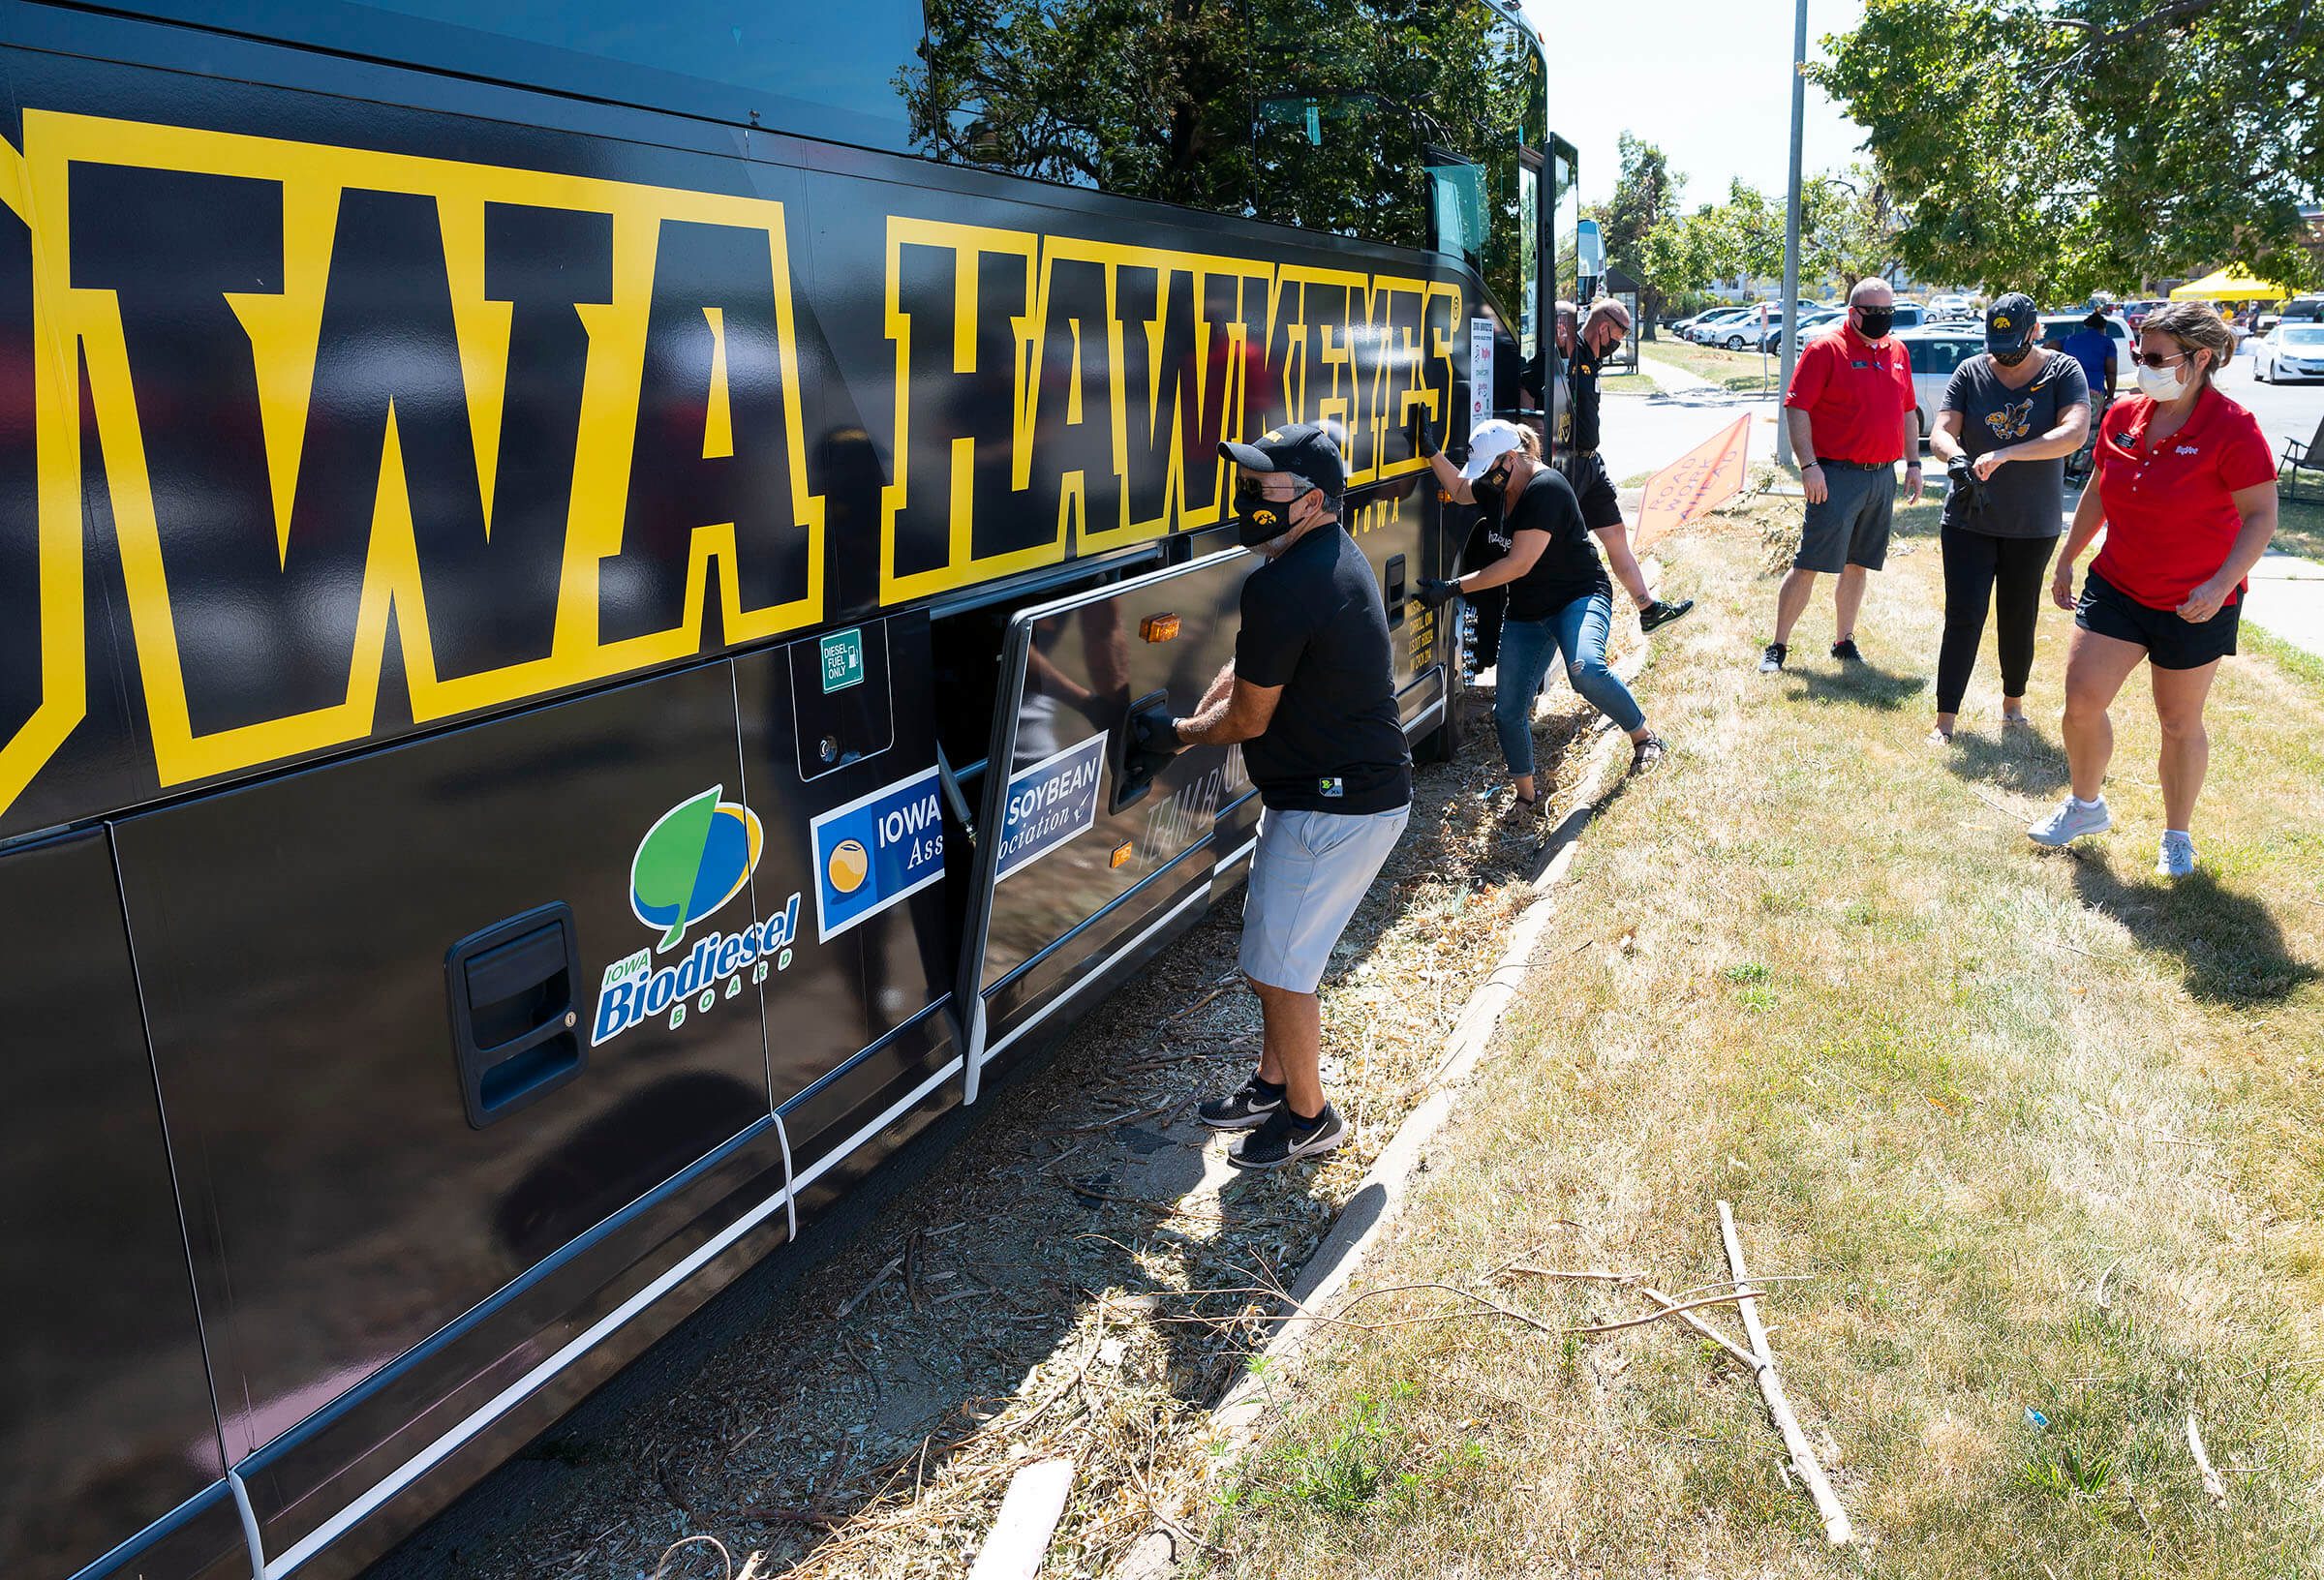 Iowa Hawkeye team bus with people outside of it wearing